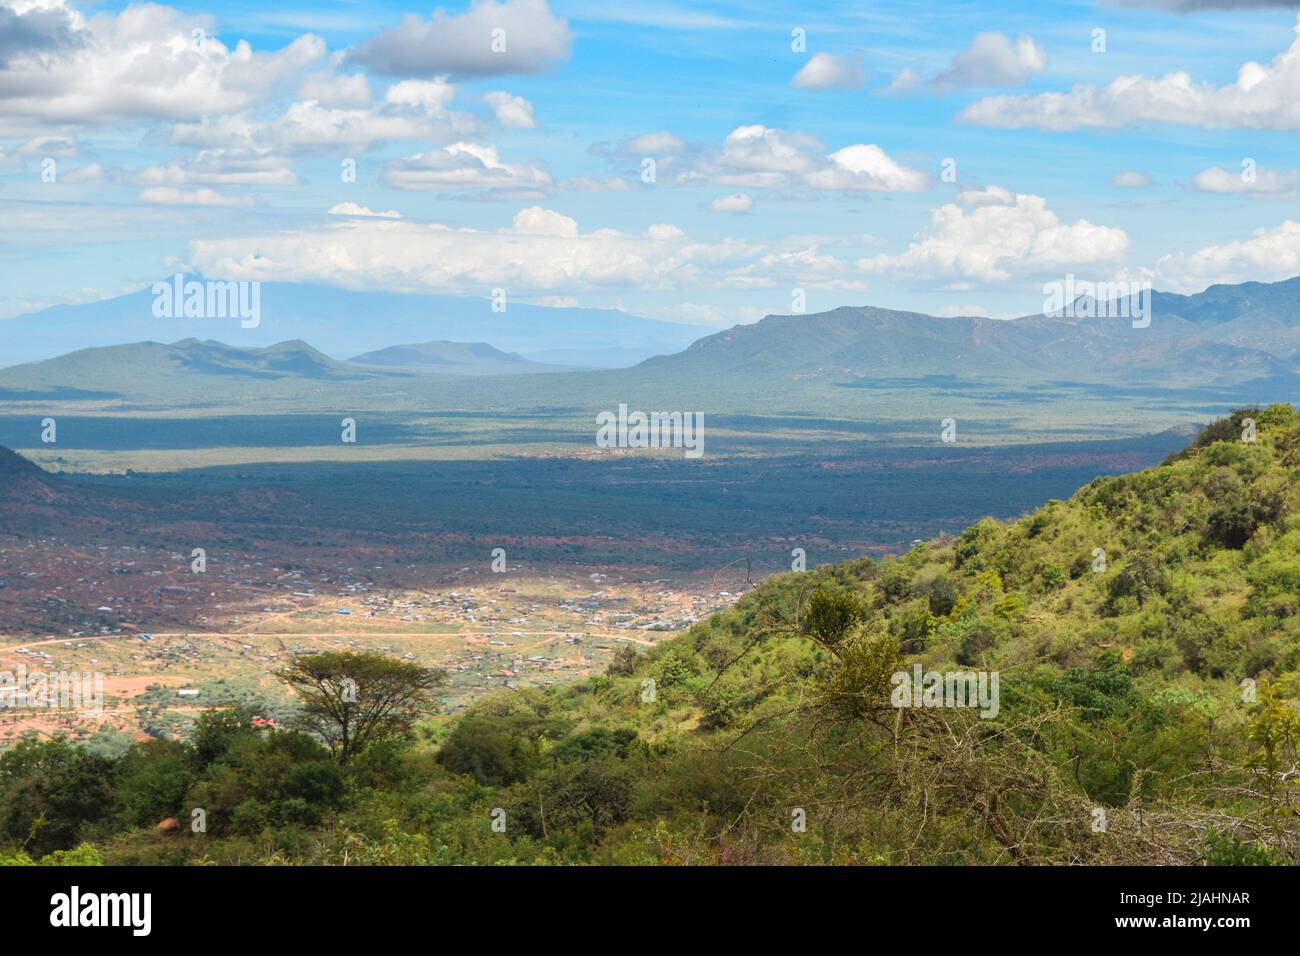 Scenic view of Mount Kilimanjaro seen from Namanga Hills, Kenya Stock Photo